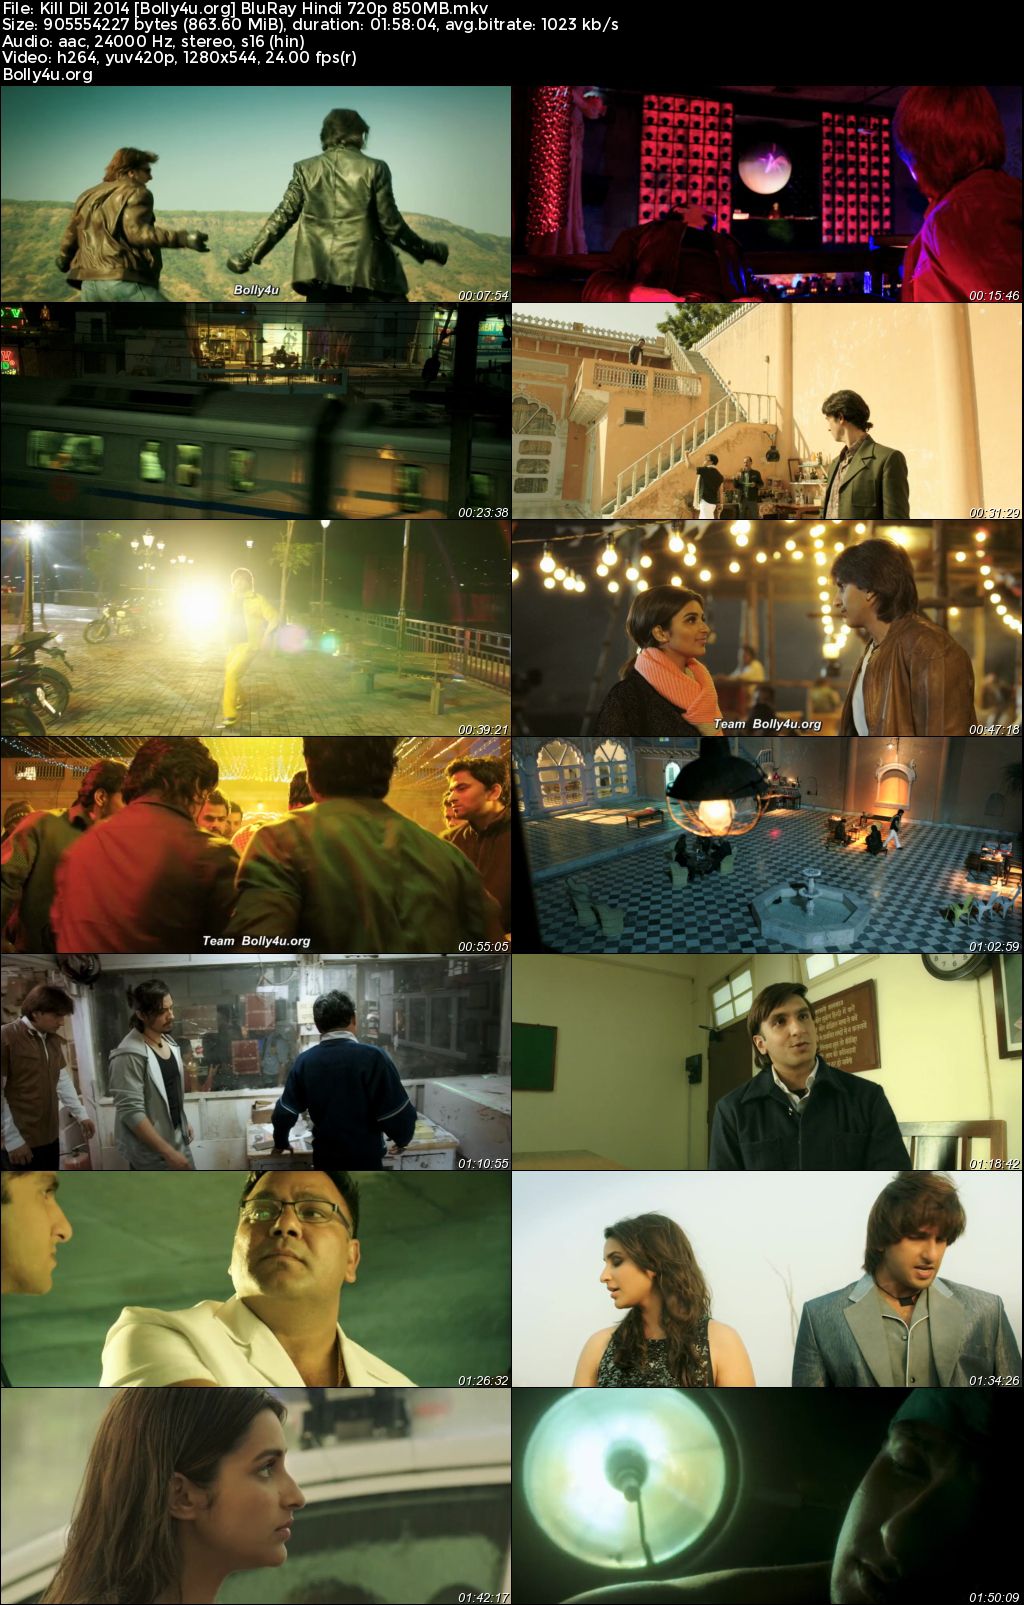 Kill Dil 2014 BluRay Hindi Full Movie Download 1080p 720p 480p